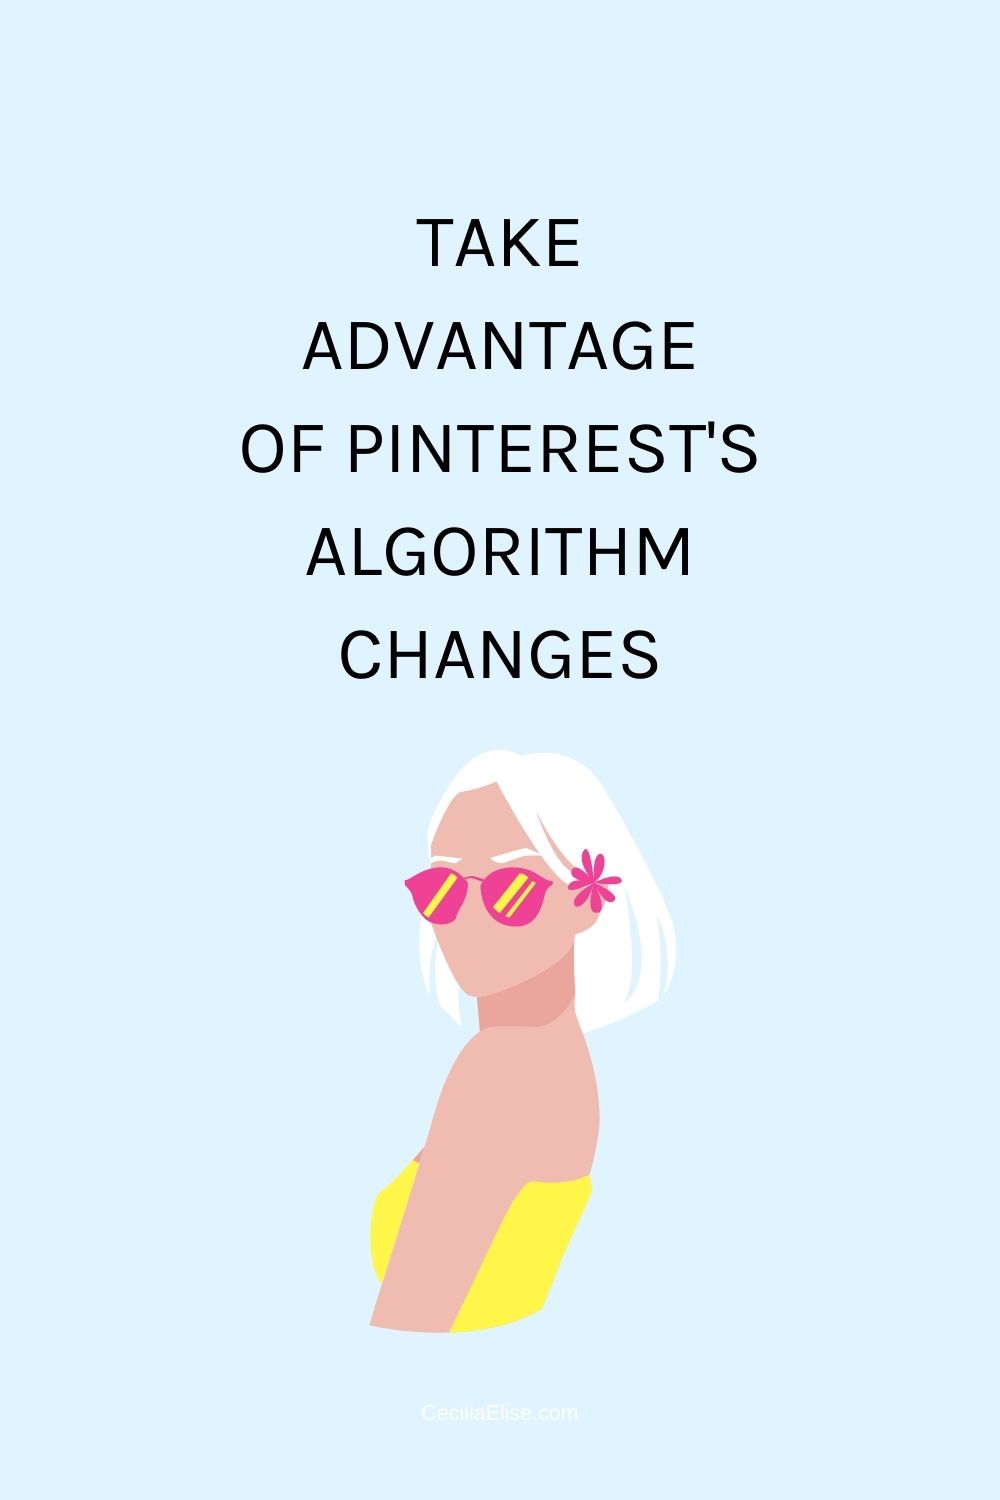 How to Use Pinterest Take Advantage of Pinterest's Algorithm Changes